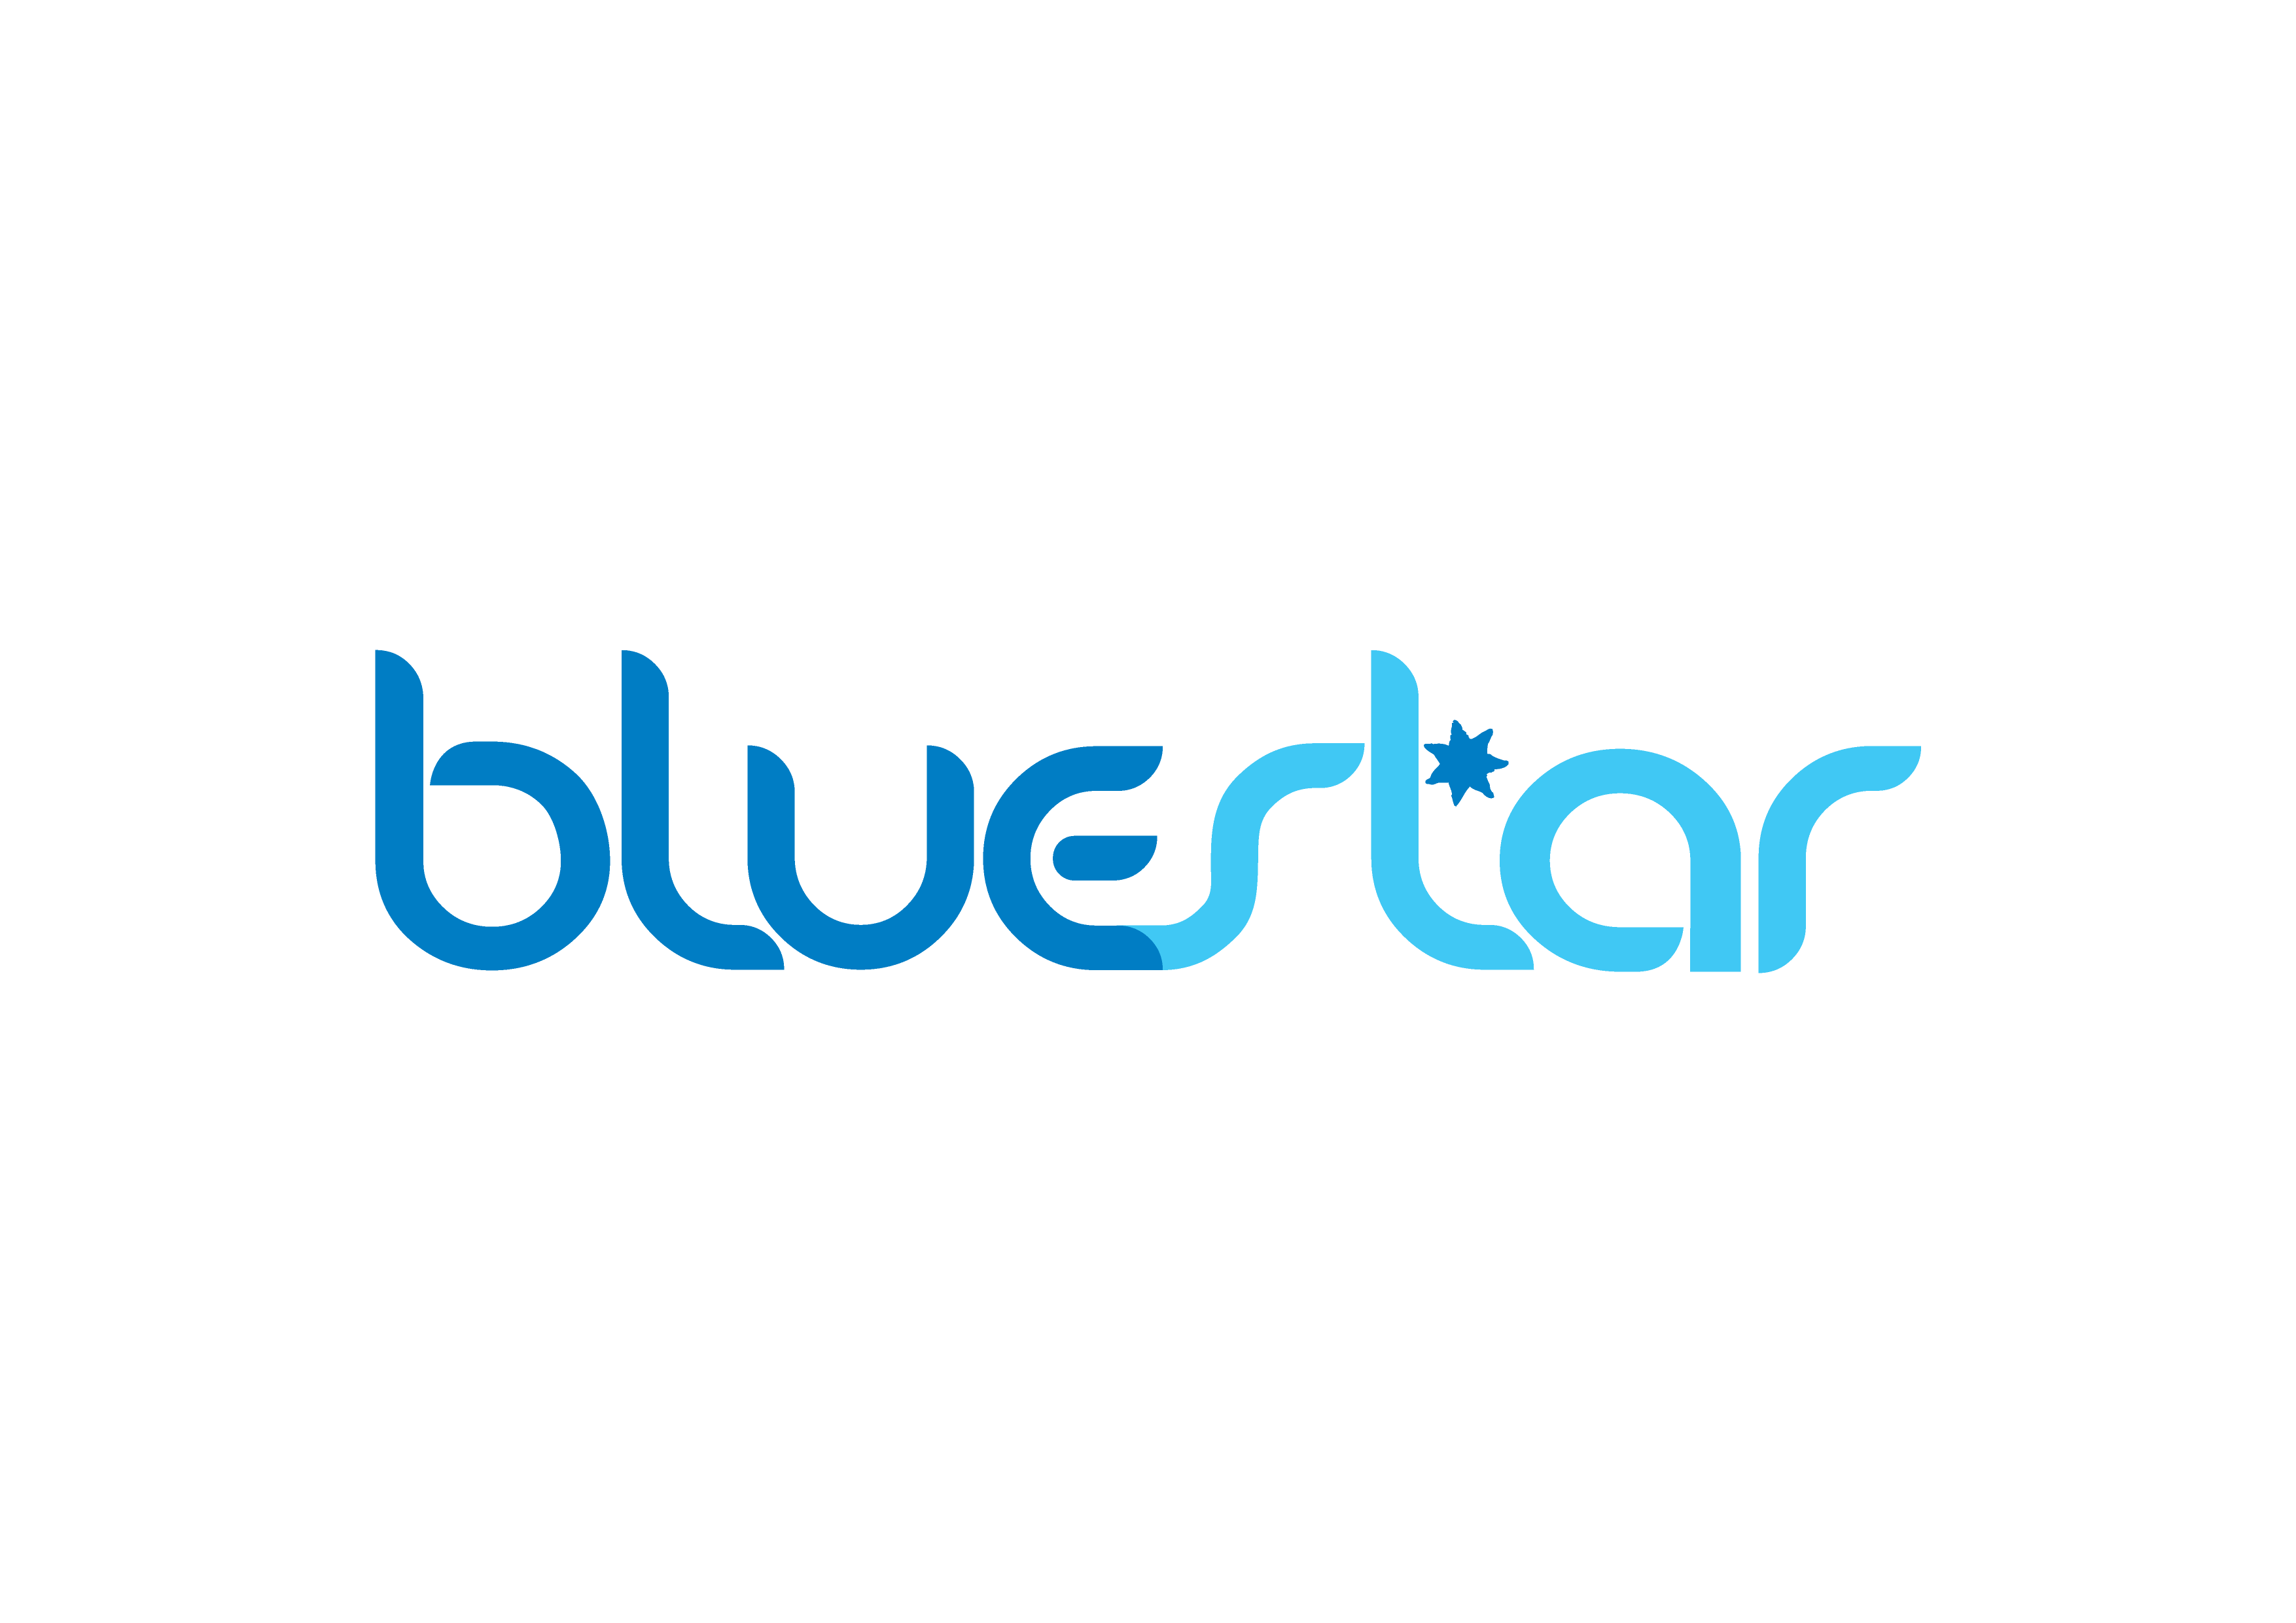 Blue Star Logo - About Bluestar - Bluestar